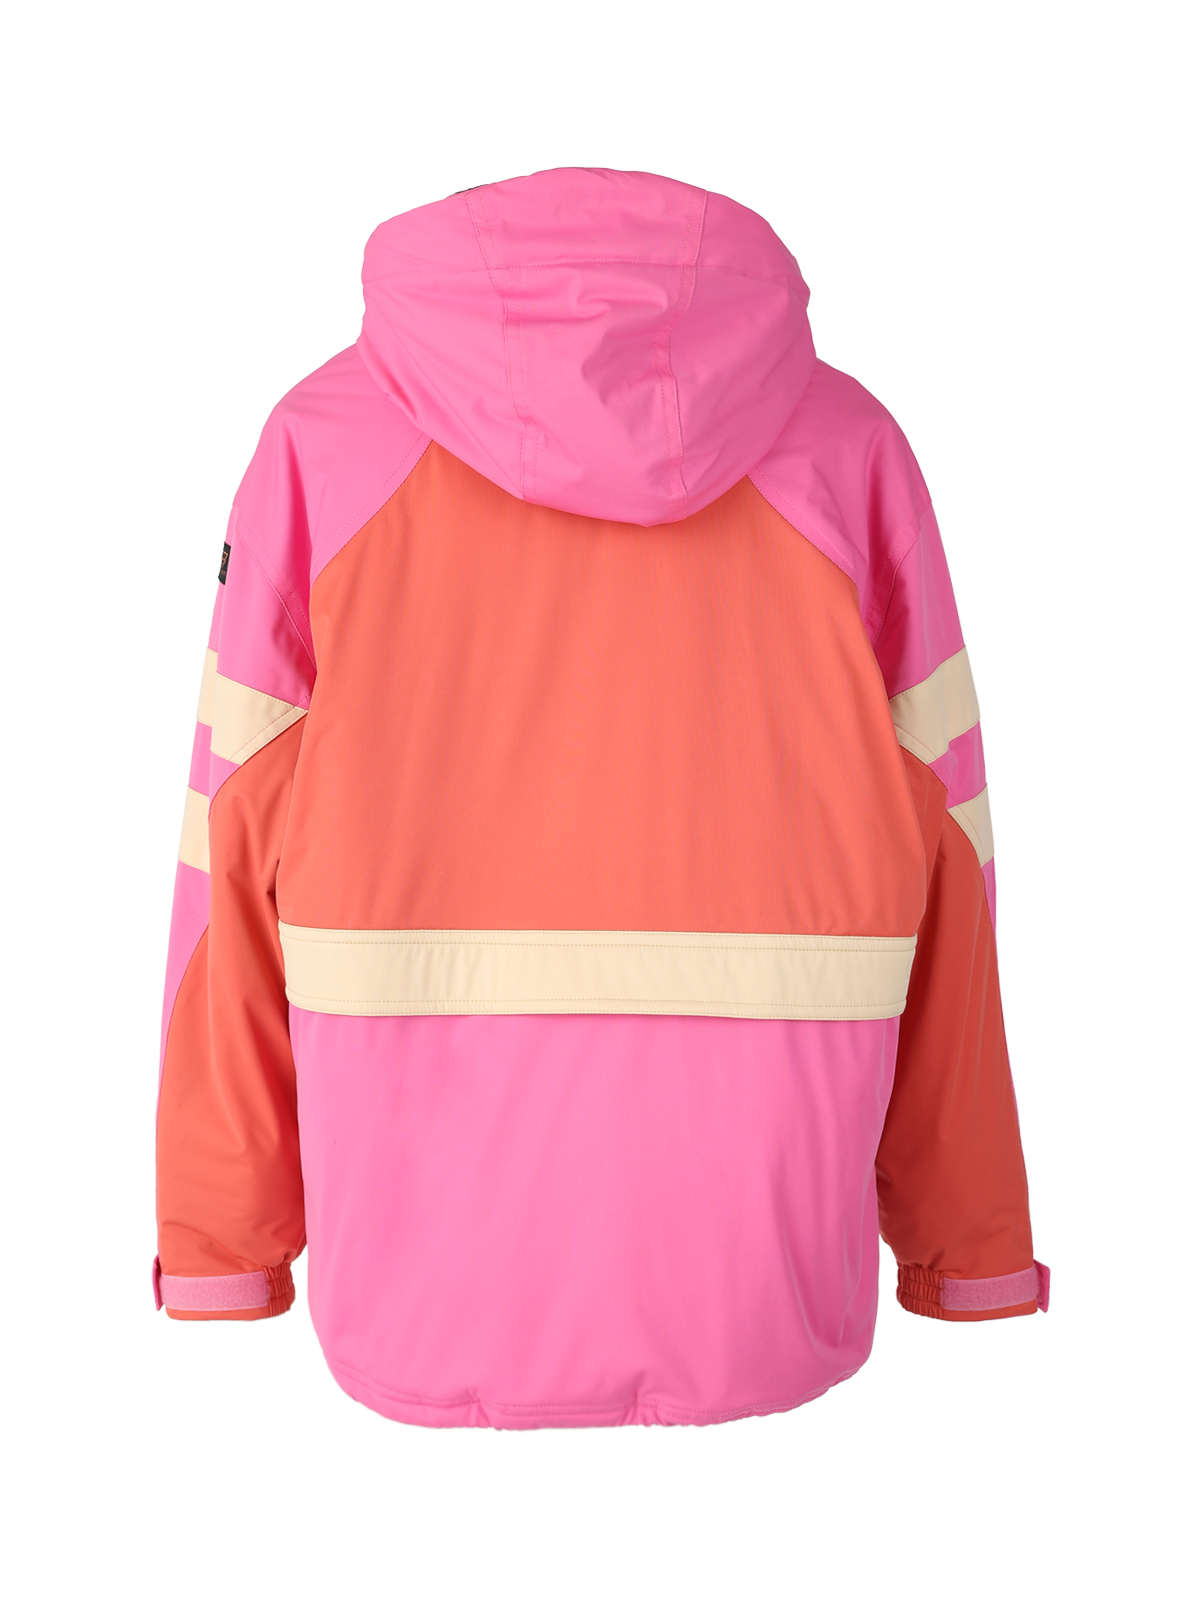 Saporo Damen Ski Anorak | Pink